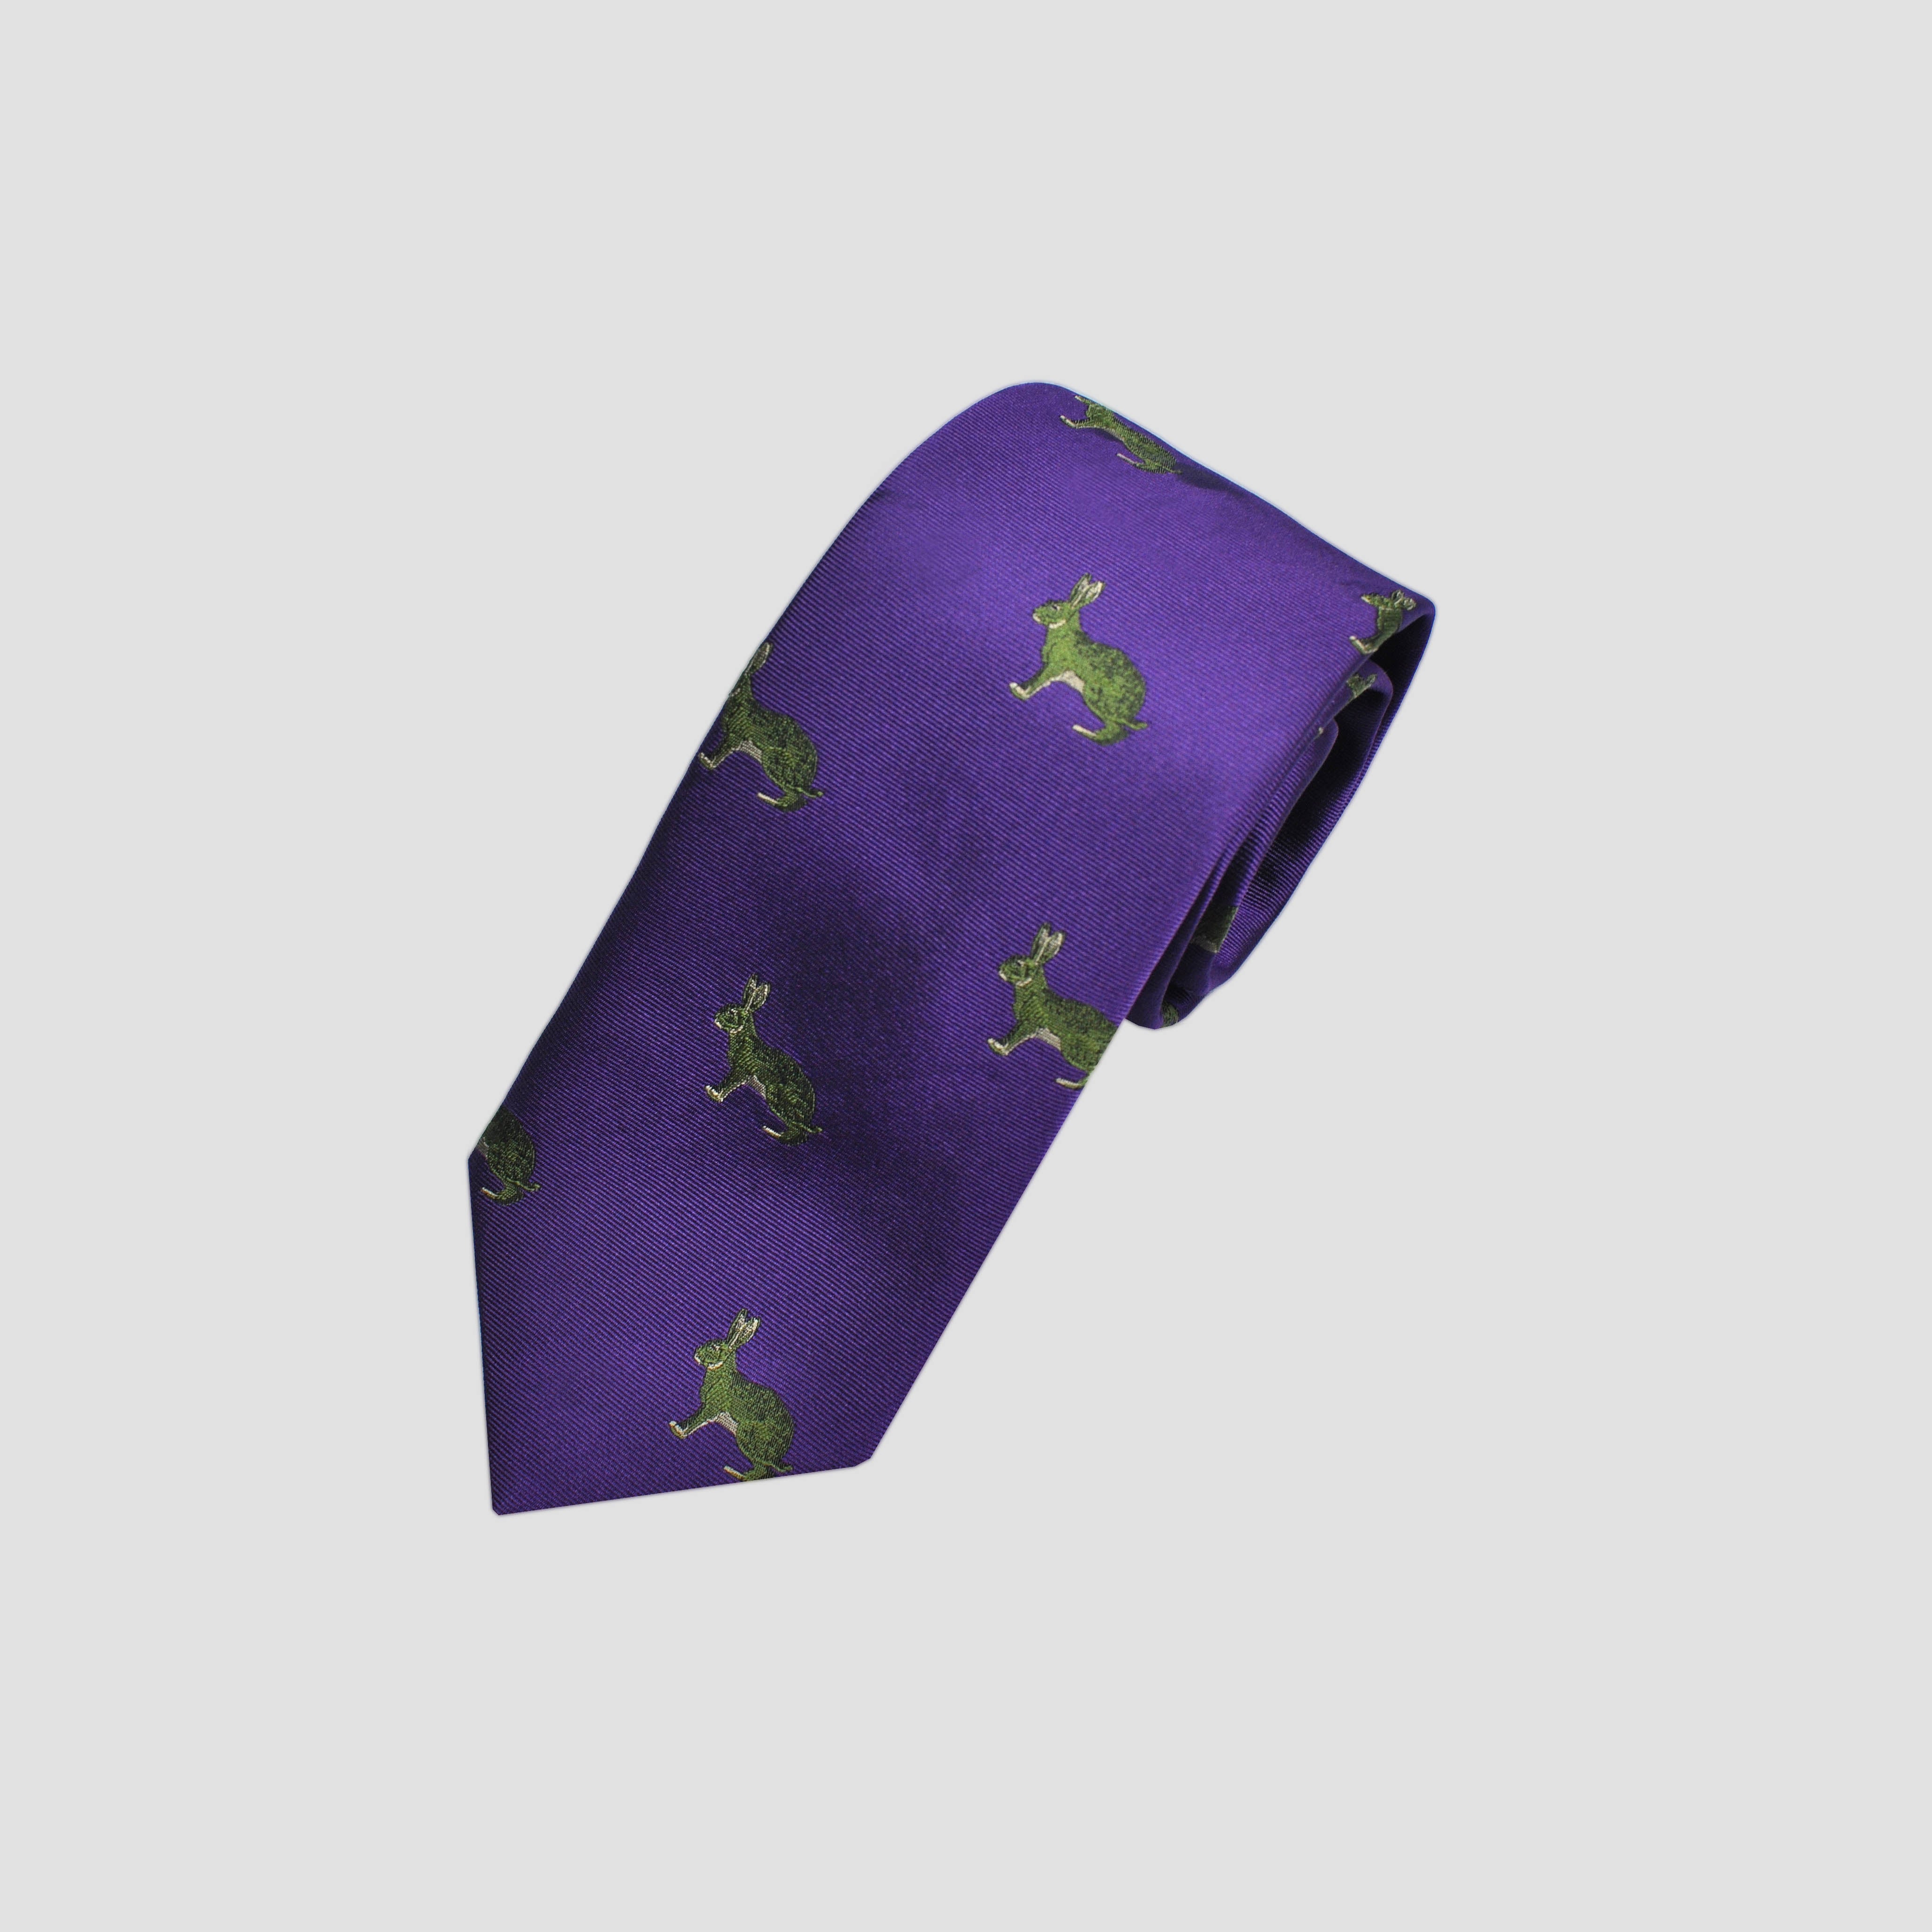 English Woven Silk 'Green Rabbit' Tie in Purple